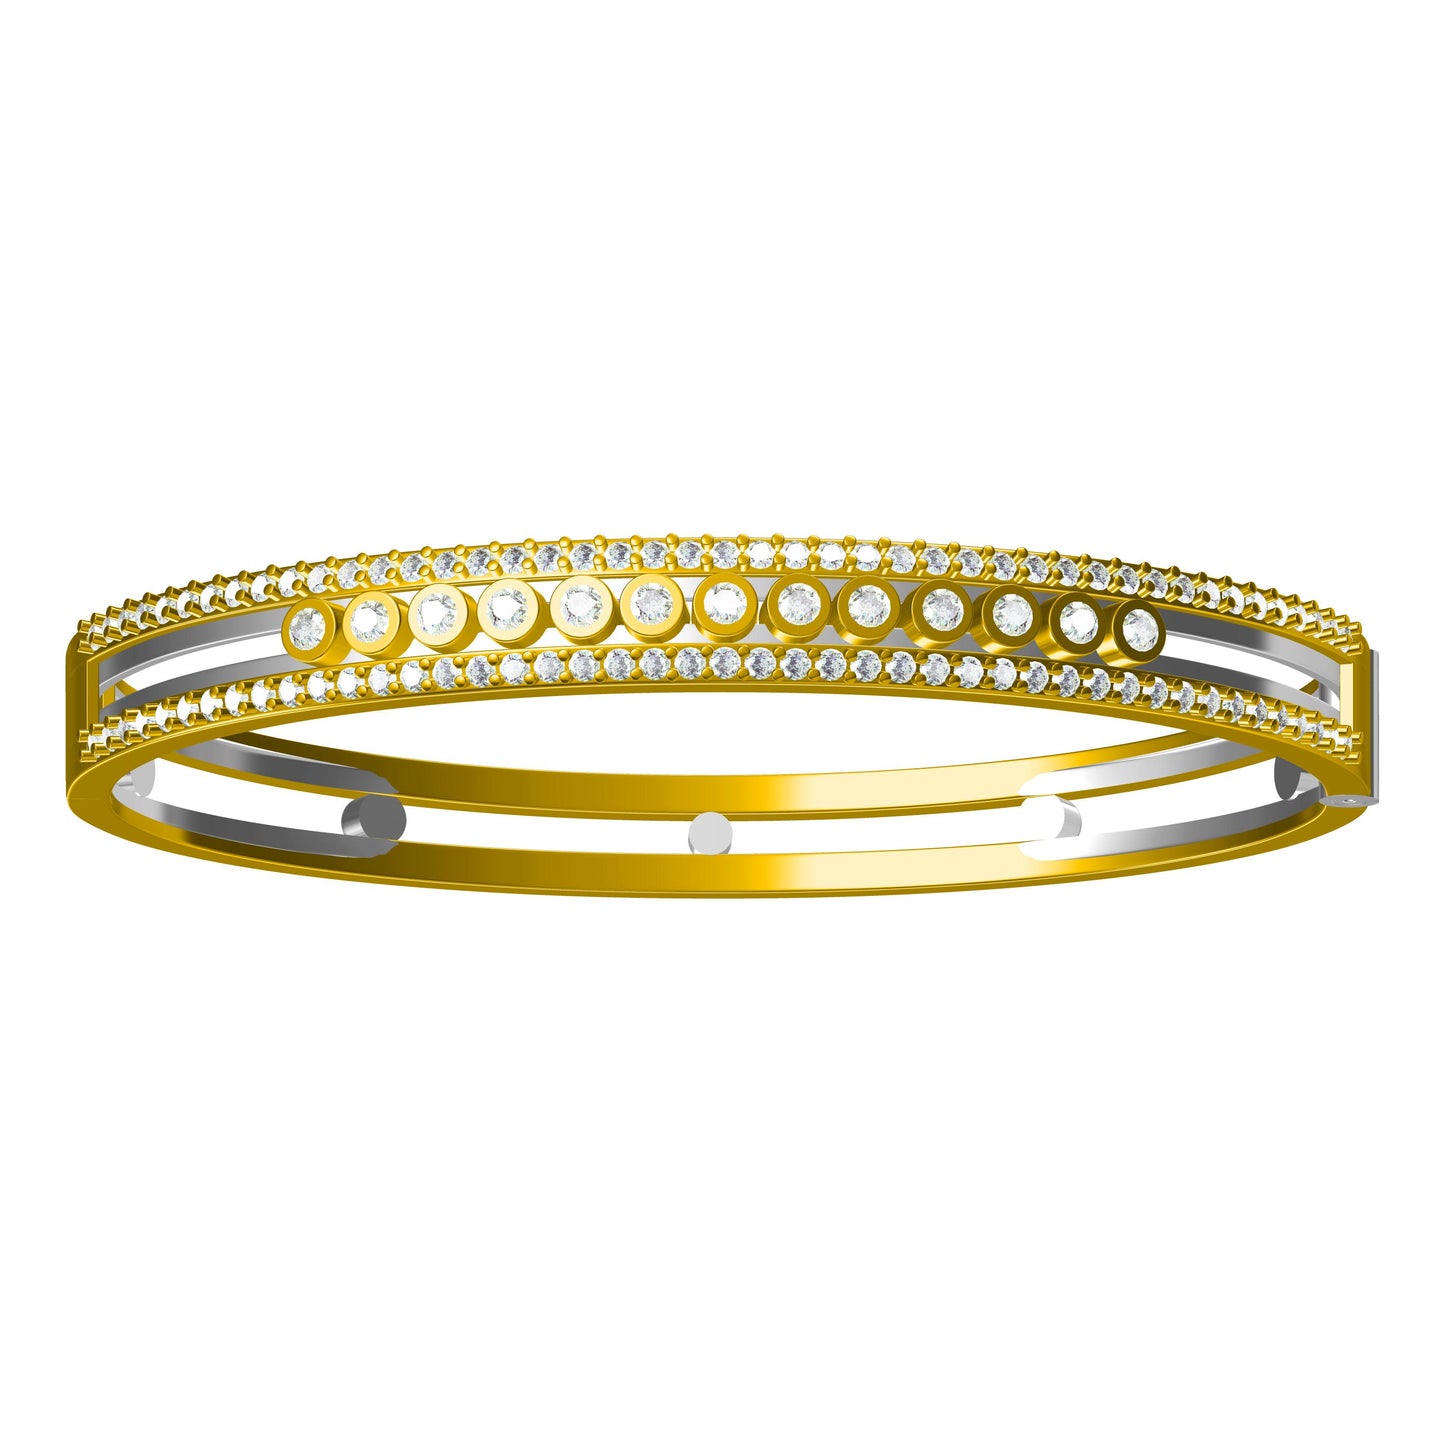 3D Jewelry Design Bracelet Files JCAD LBR-004-1277